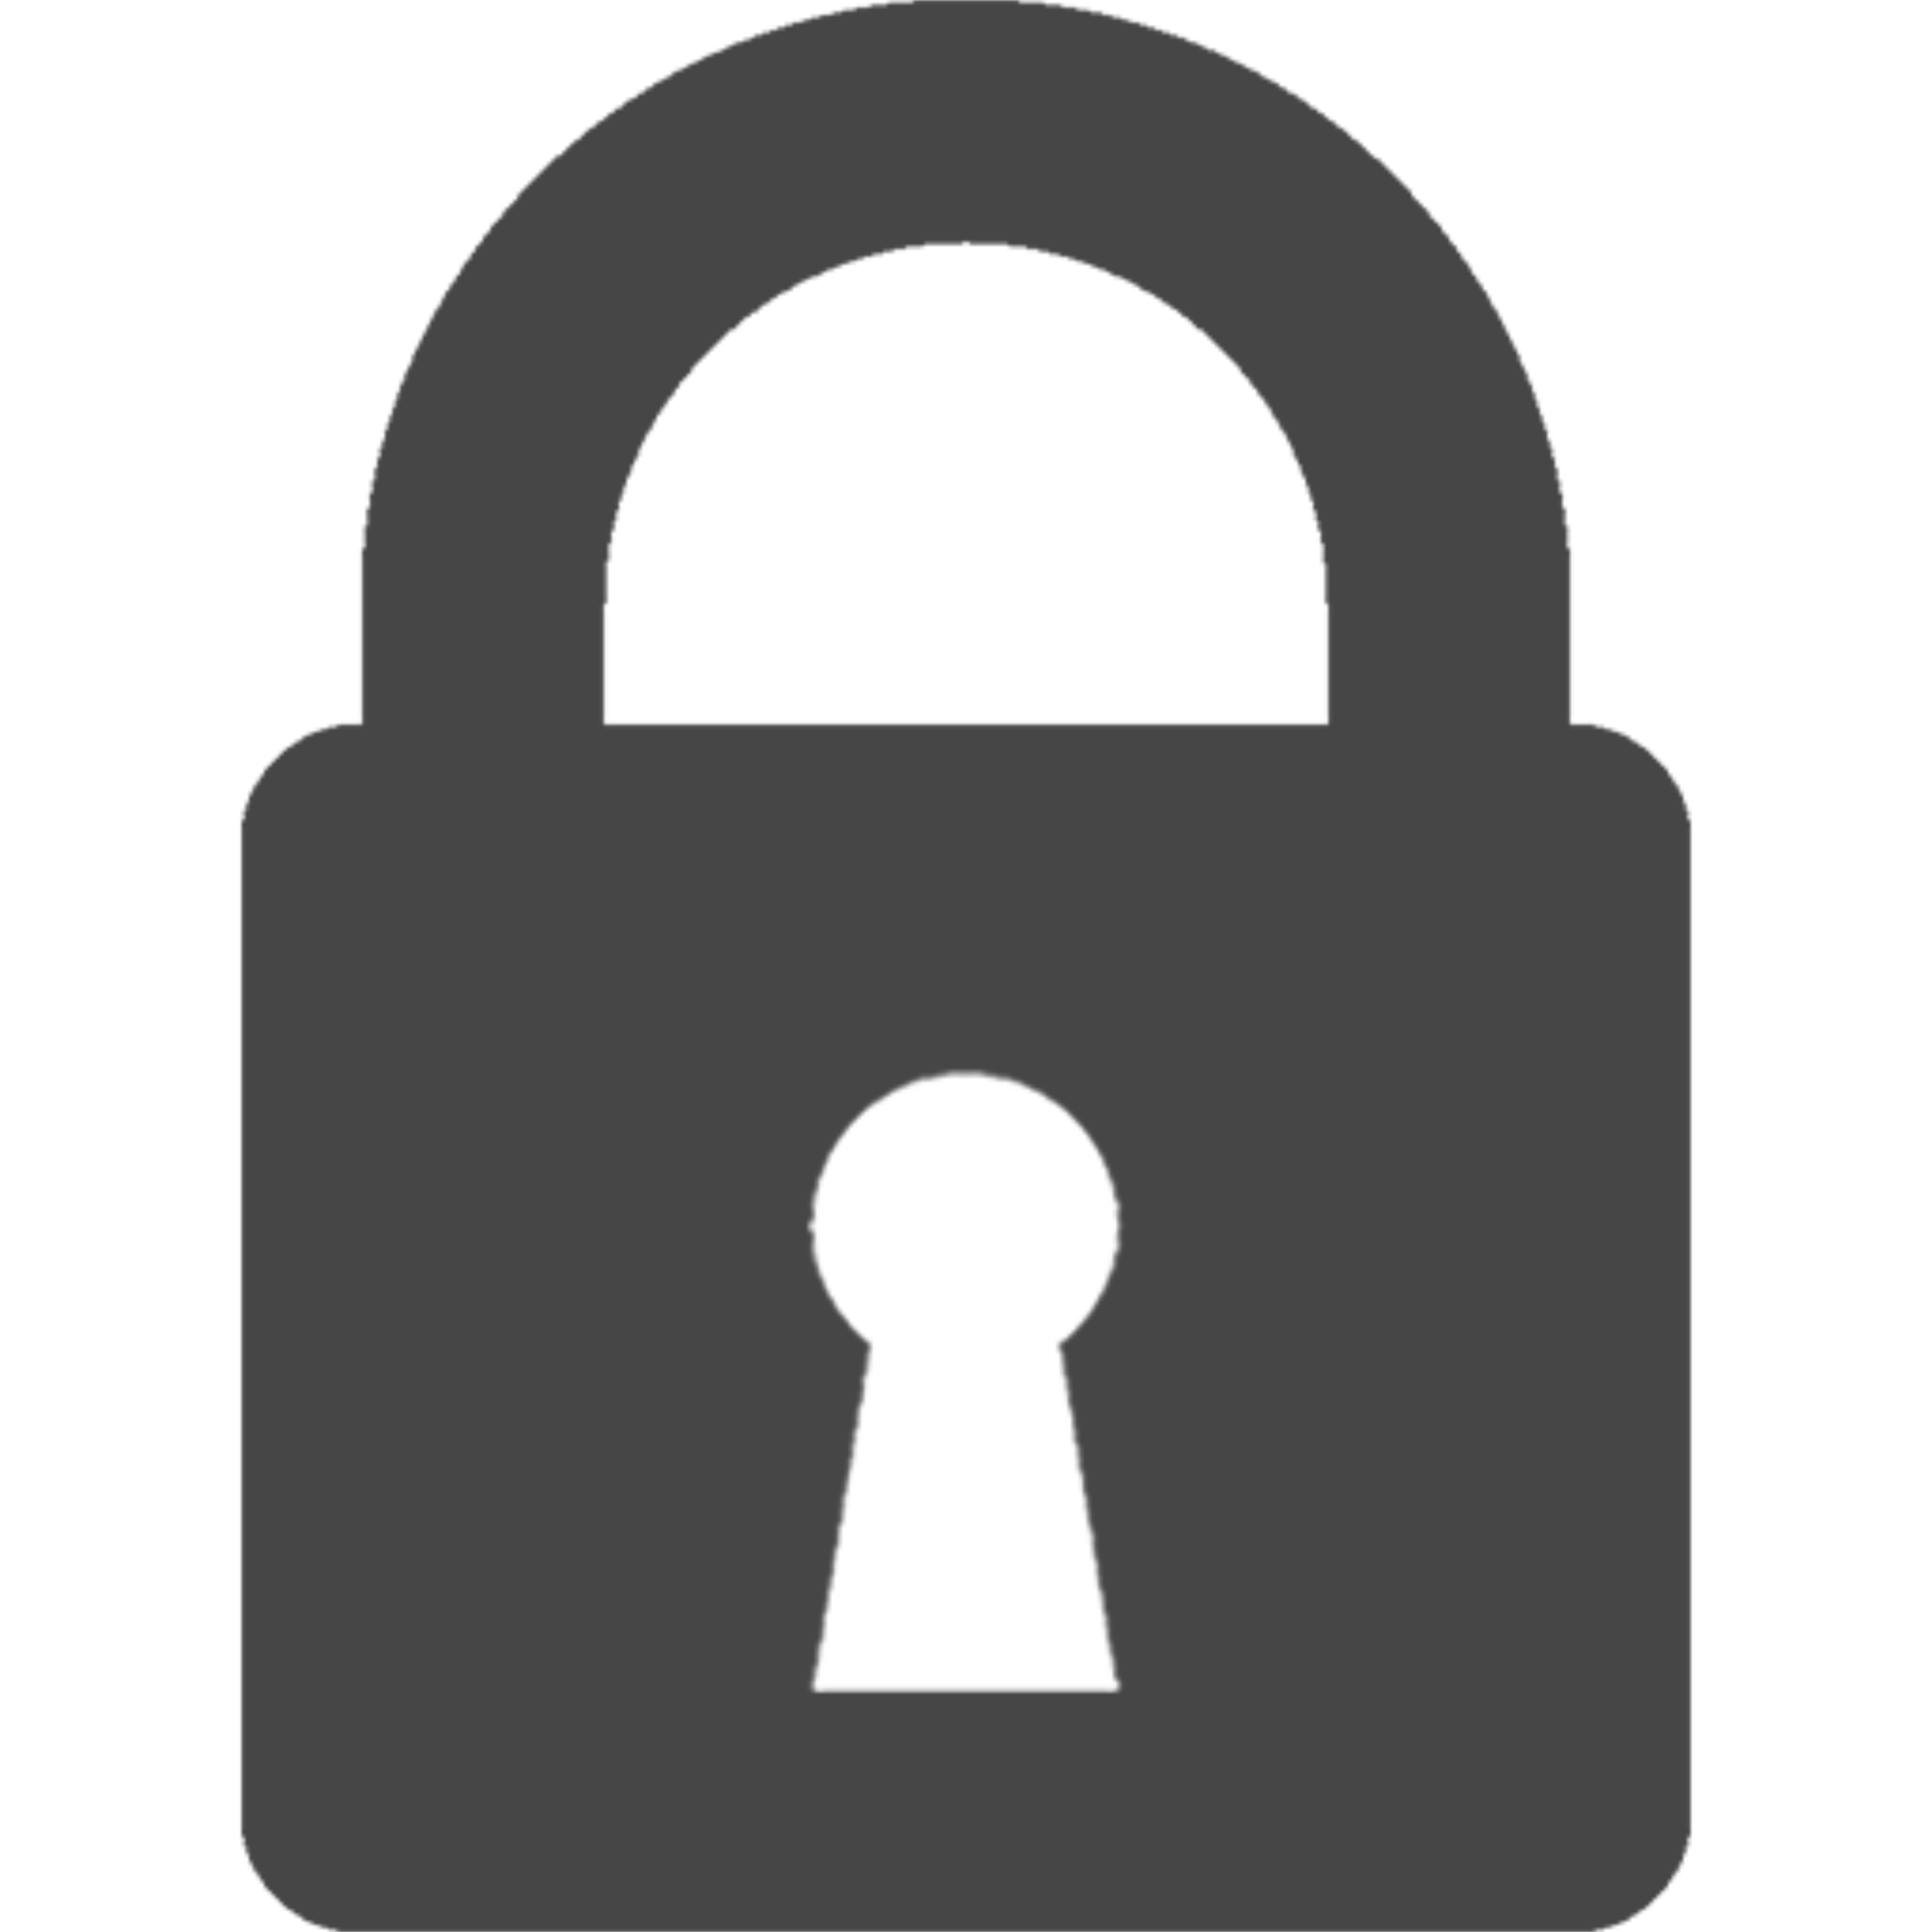 File icon with a lock symbol